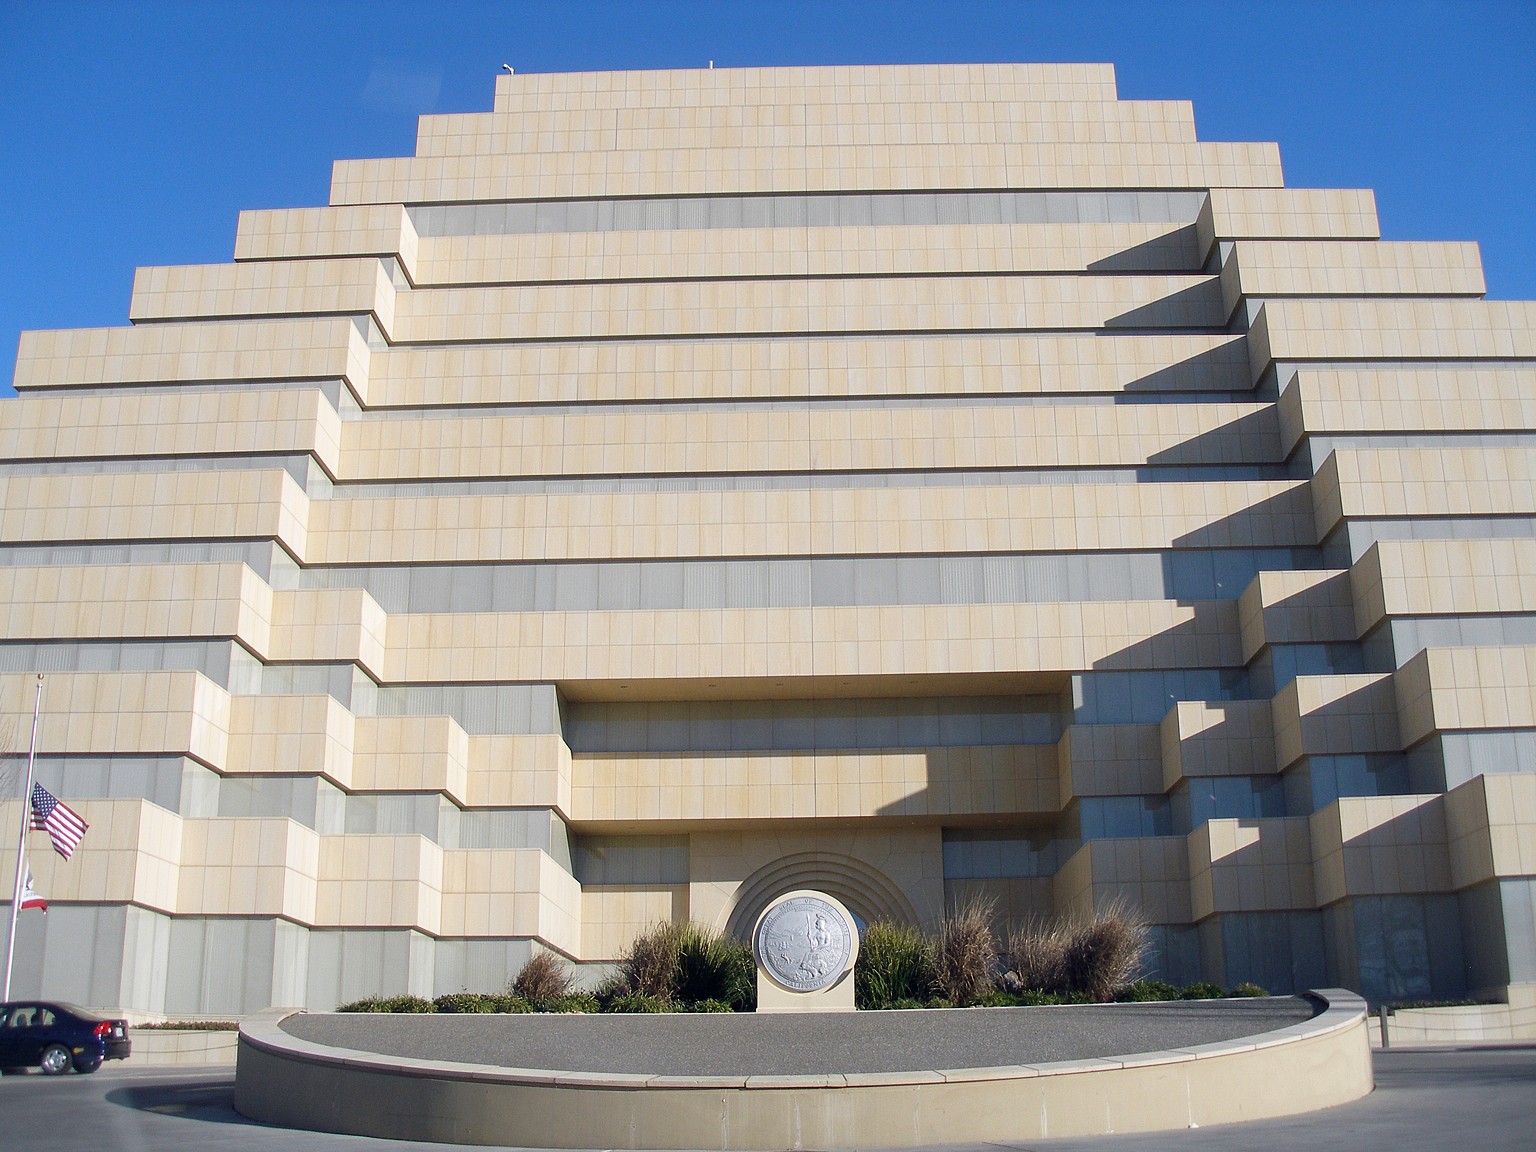  The Ziggurat